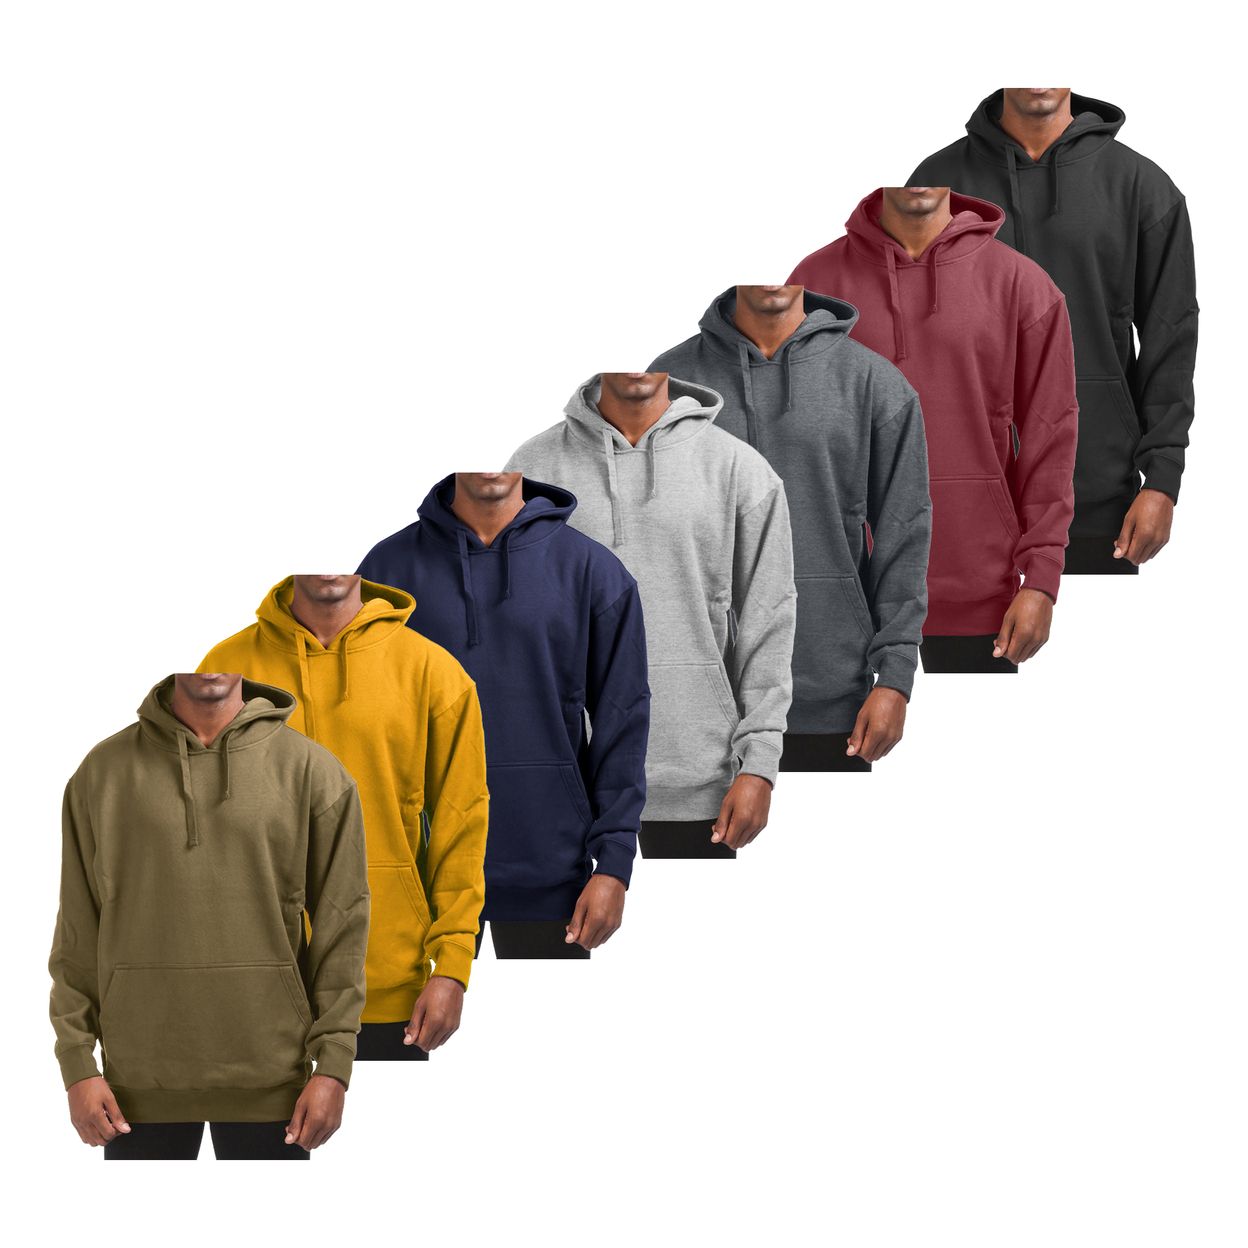 2-Pack: Men's Super-Soft Winter Warm Cotton-Blend Fleece Pullover Hoodie With Kangaroo Pocket - Black & Navy, Medium